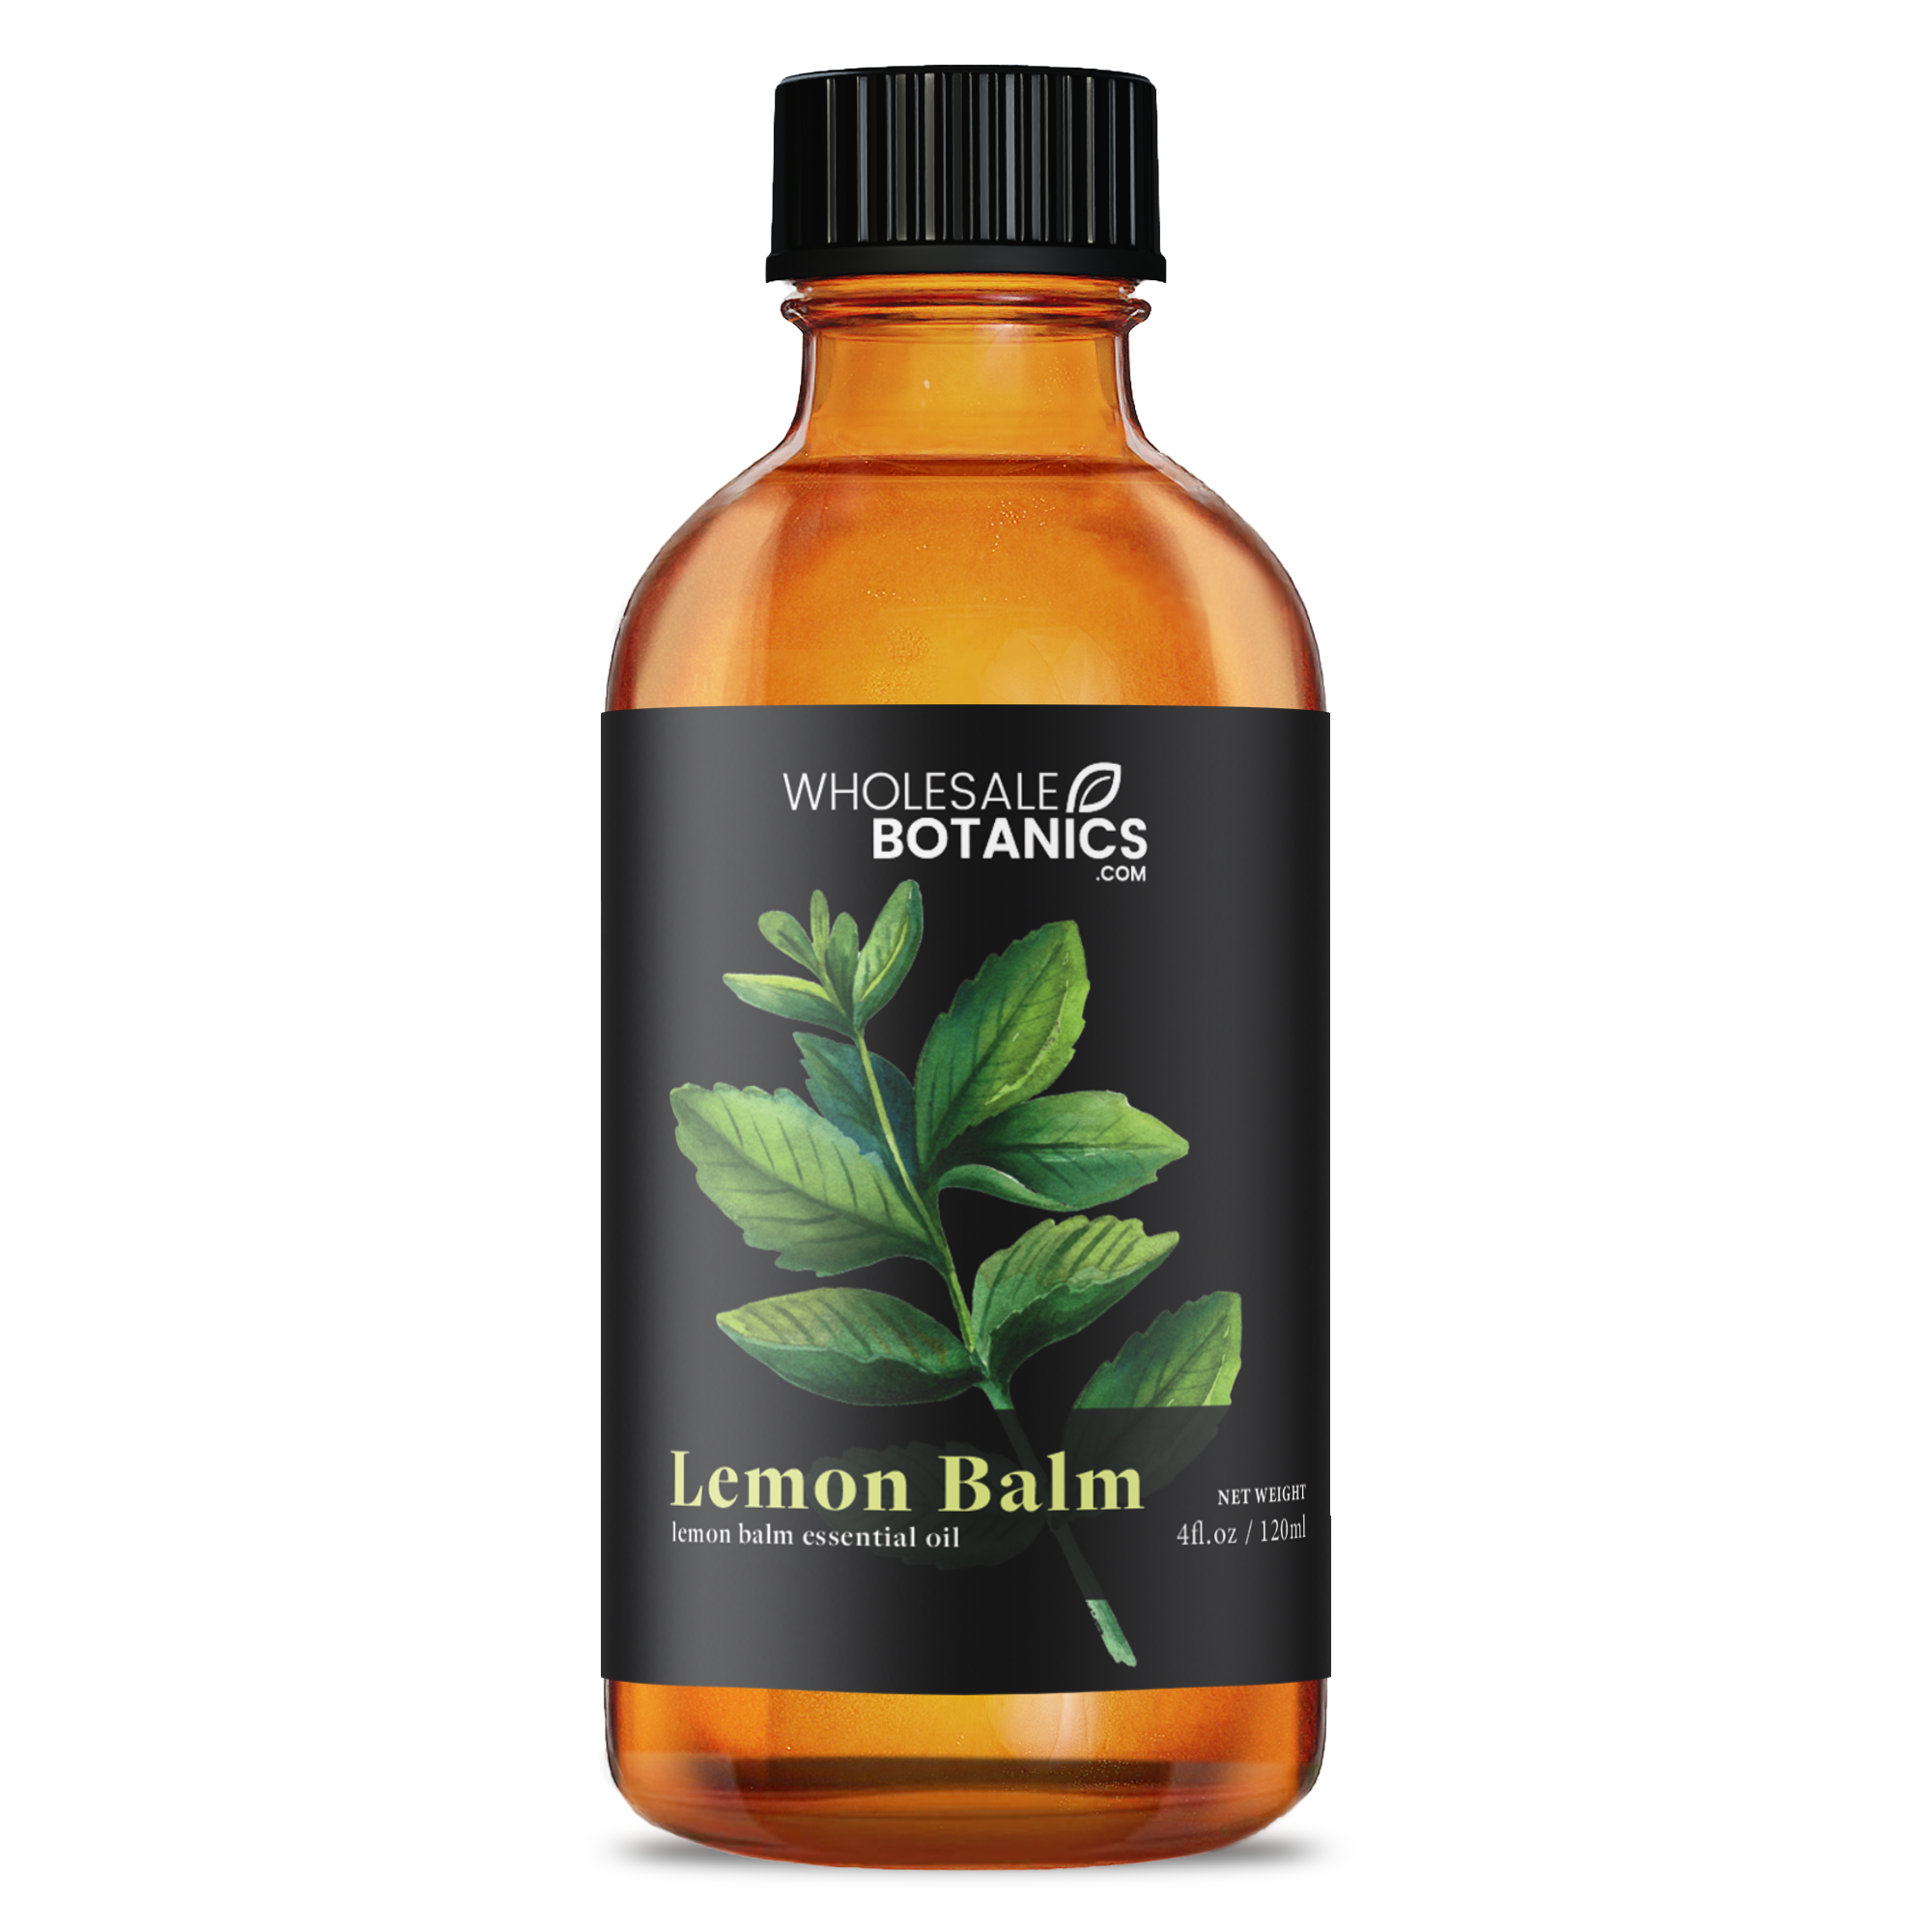 Lemon Balm Essential Oil